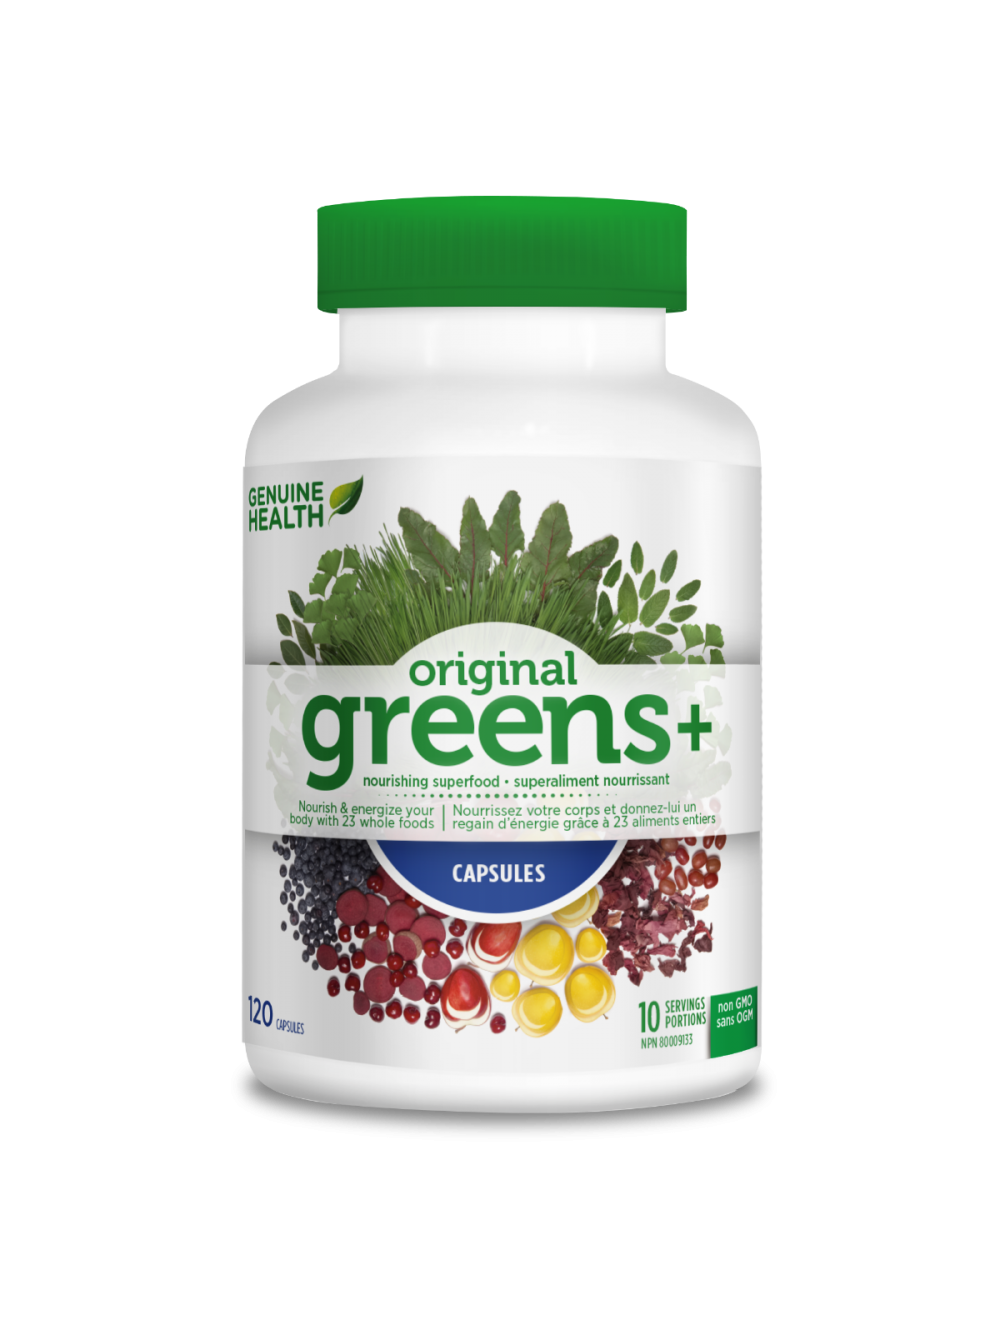 Genuine Health greens+ capsules-1